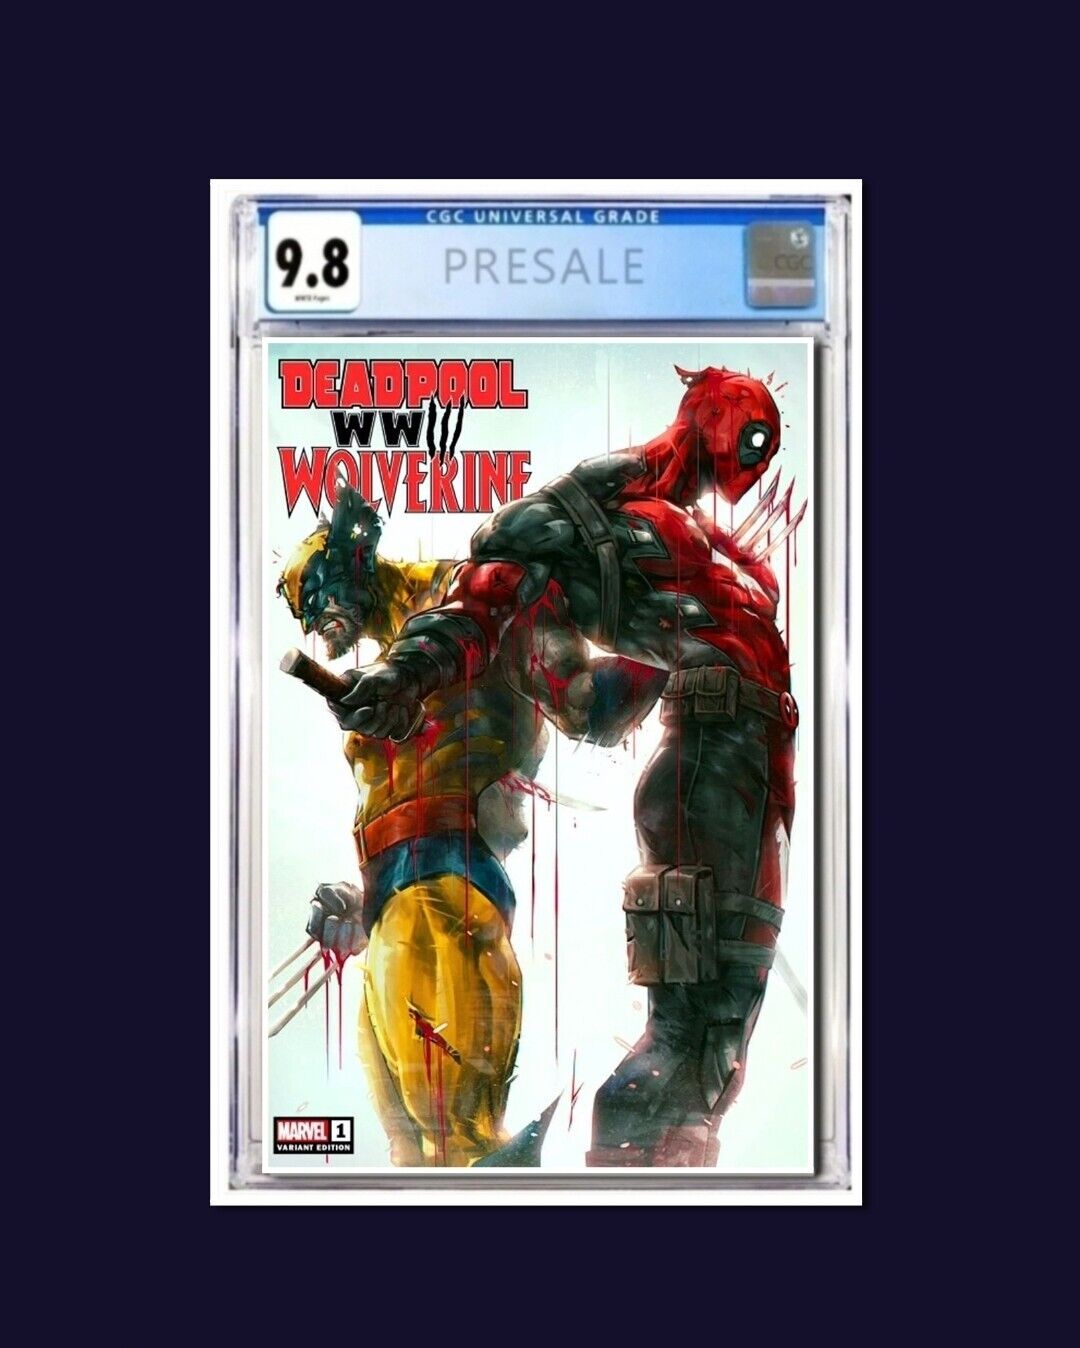 🔥 Deadpool Wolverine WWIII #1 CGC 9.8 PREORDER Ivan Tao Variant Edition 🔥